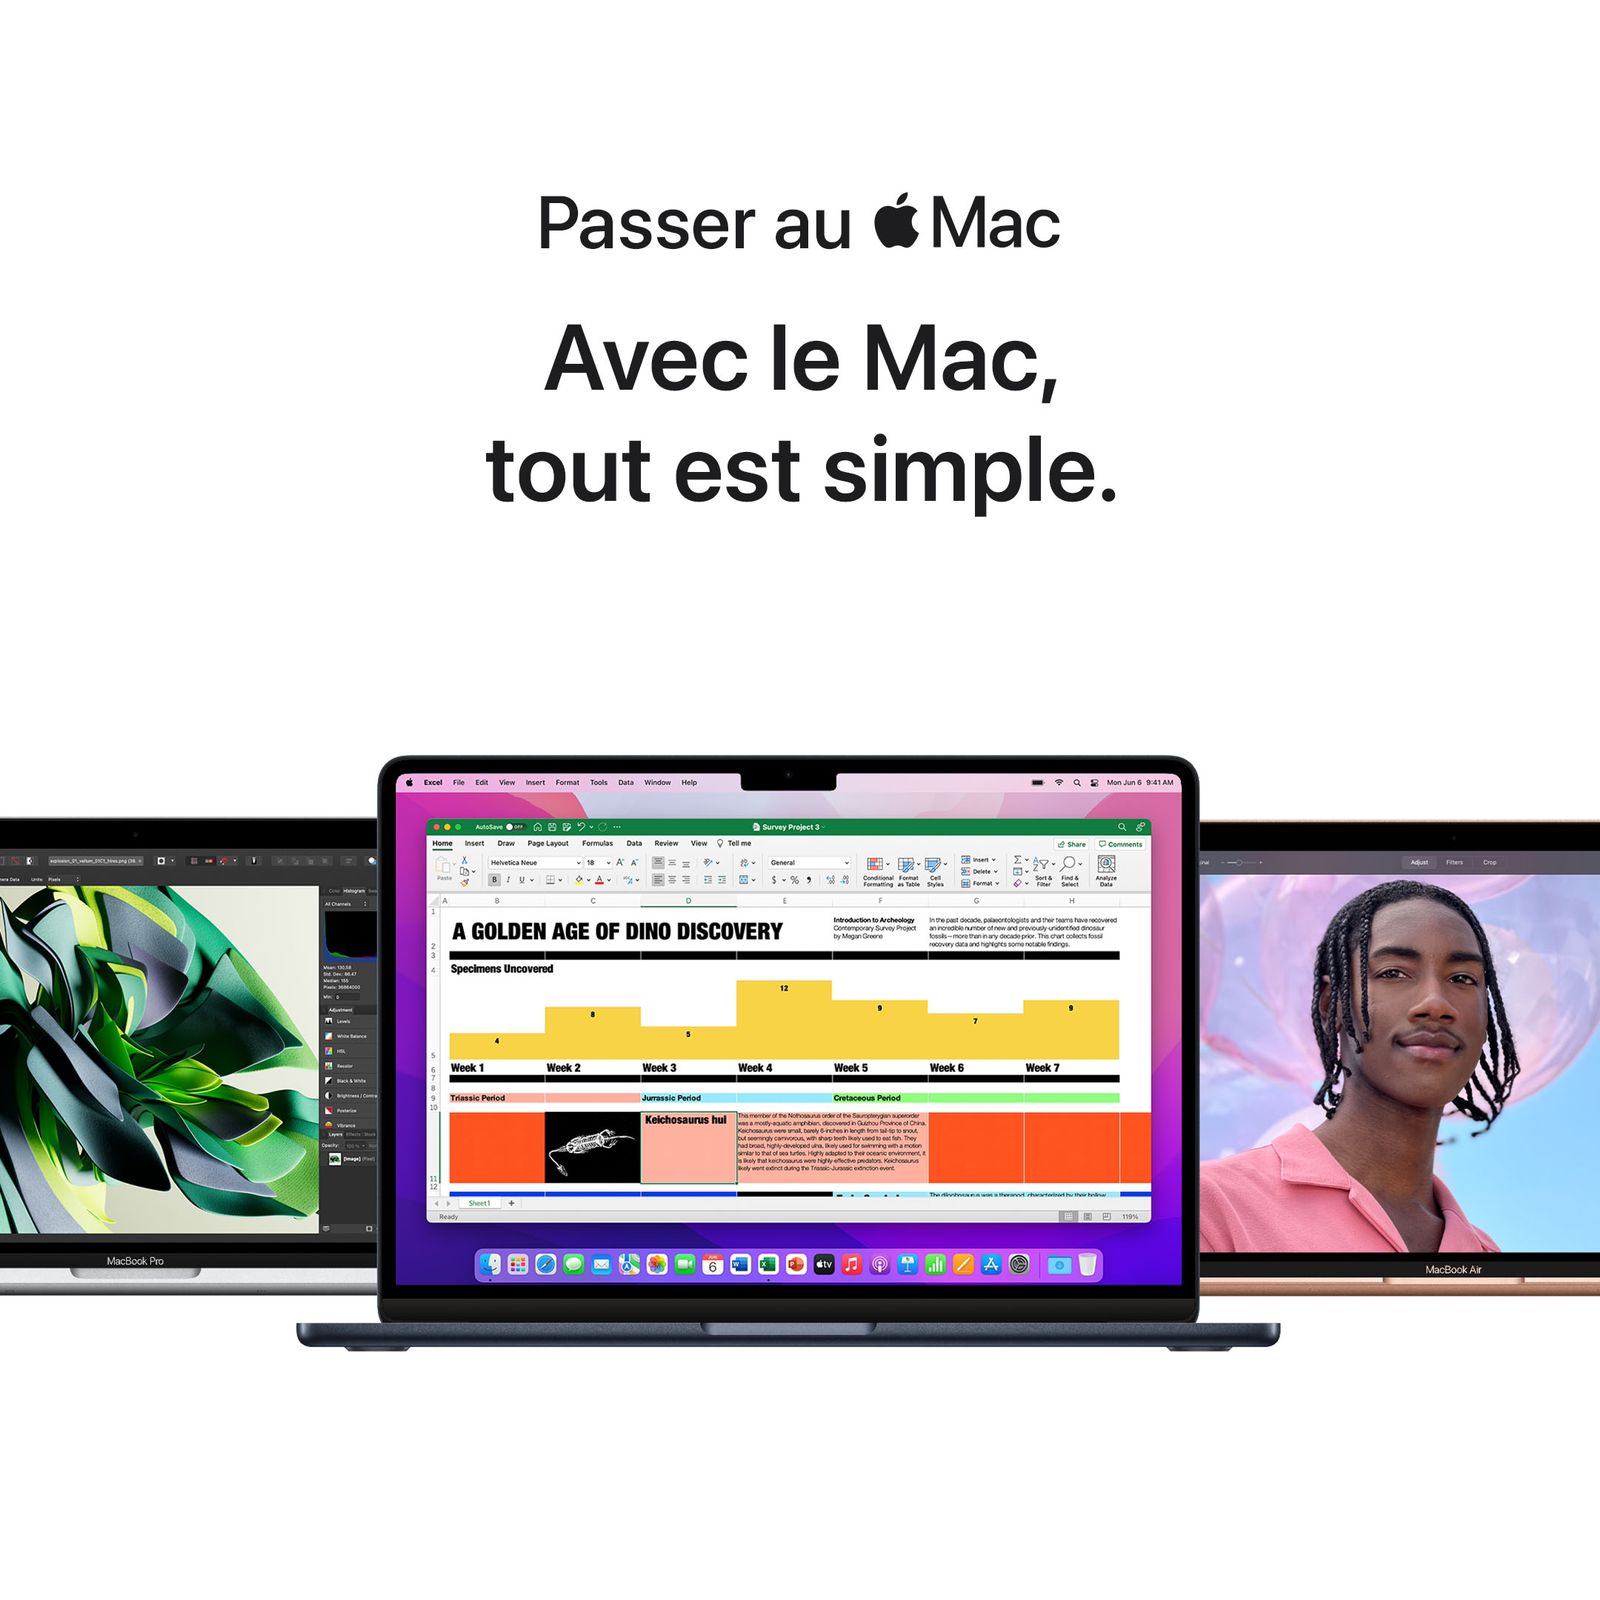 Passer au Mac